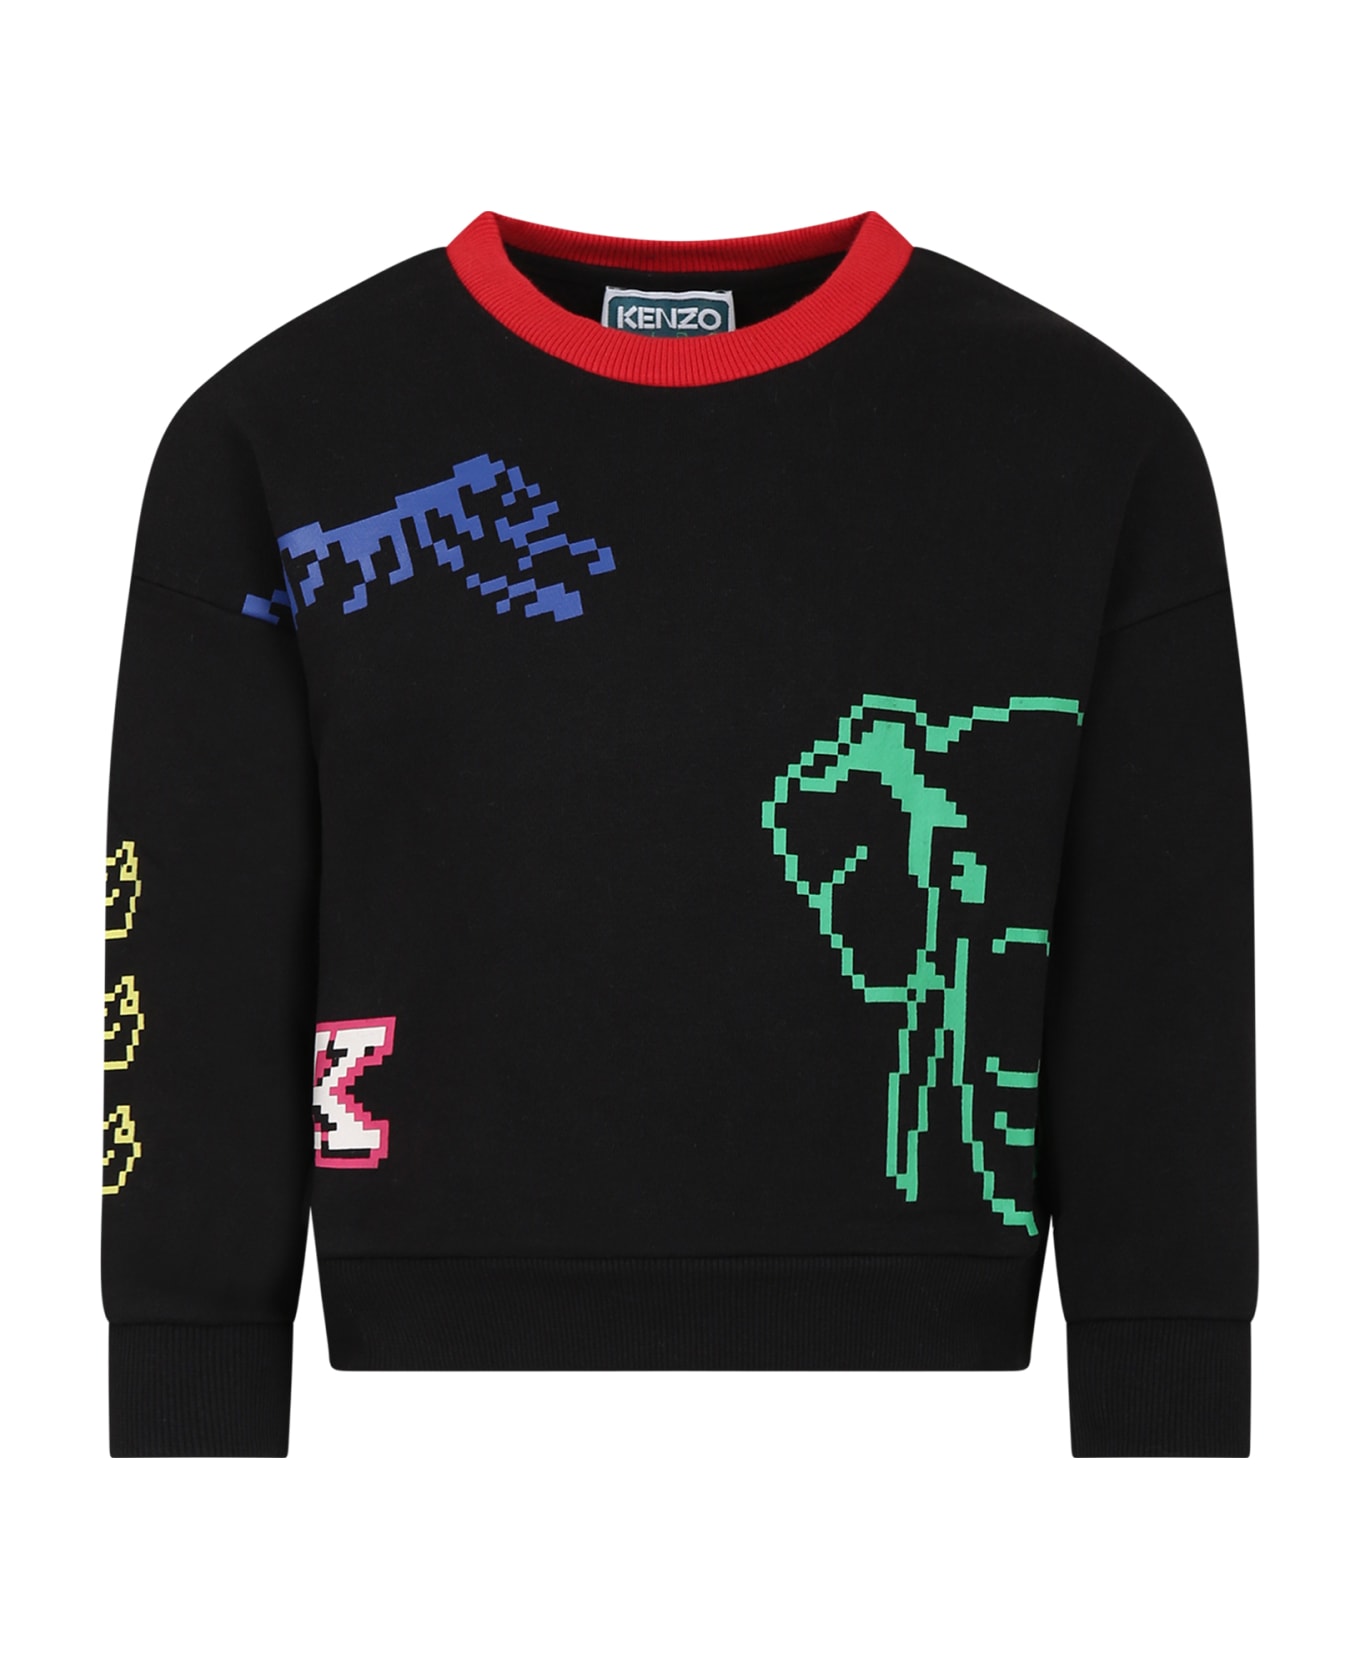 Kenzo Kids Black Sweatshirt For Boy With Animals And Logo - Black